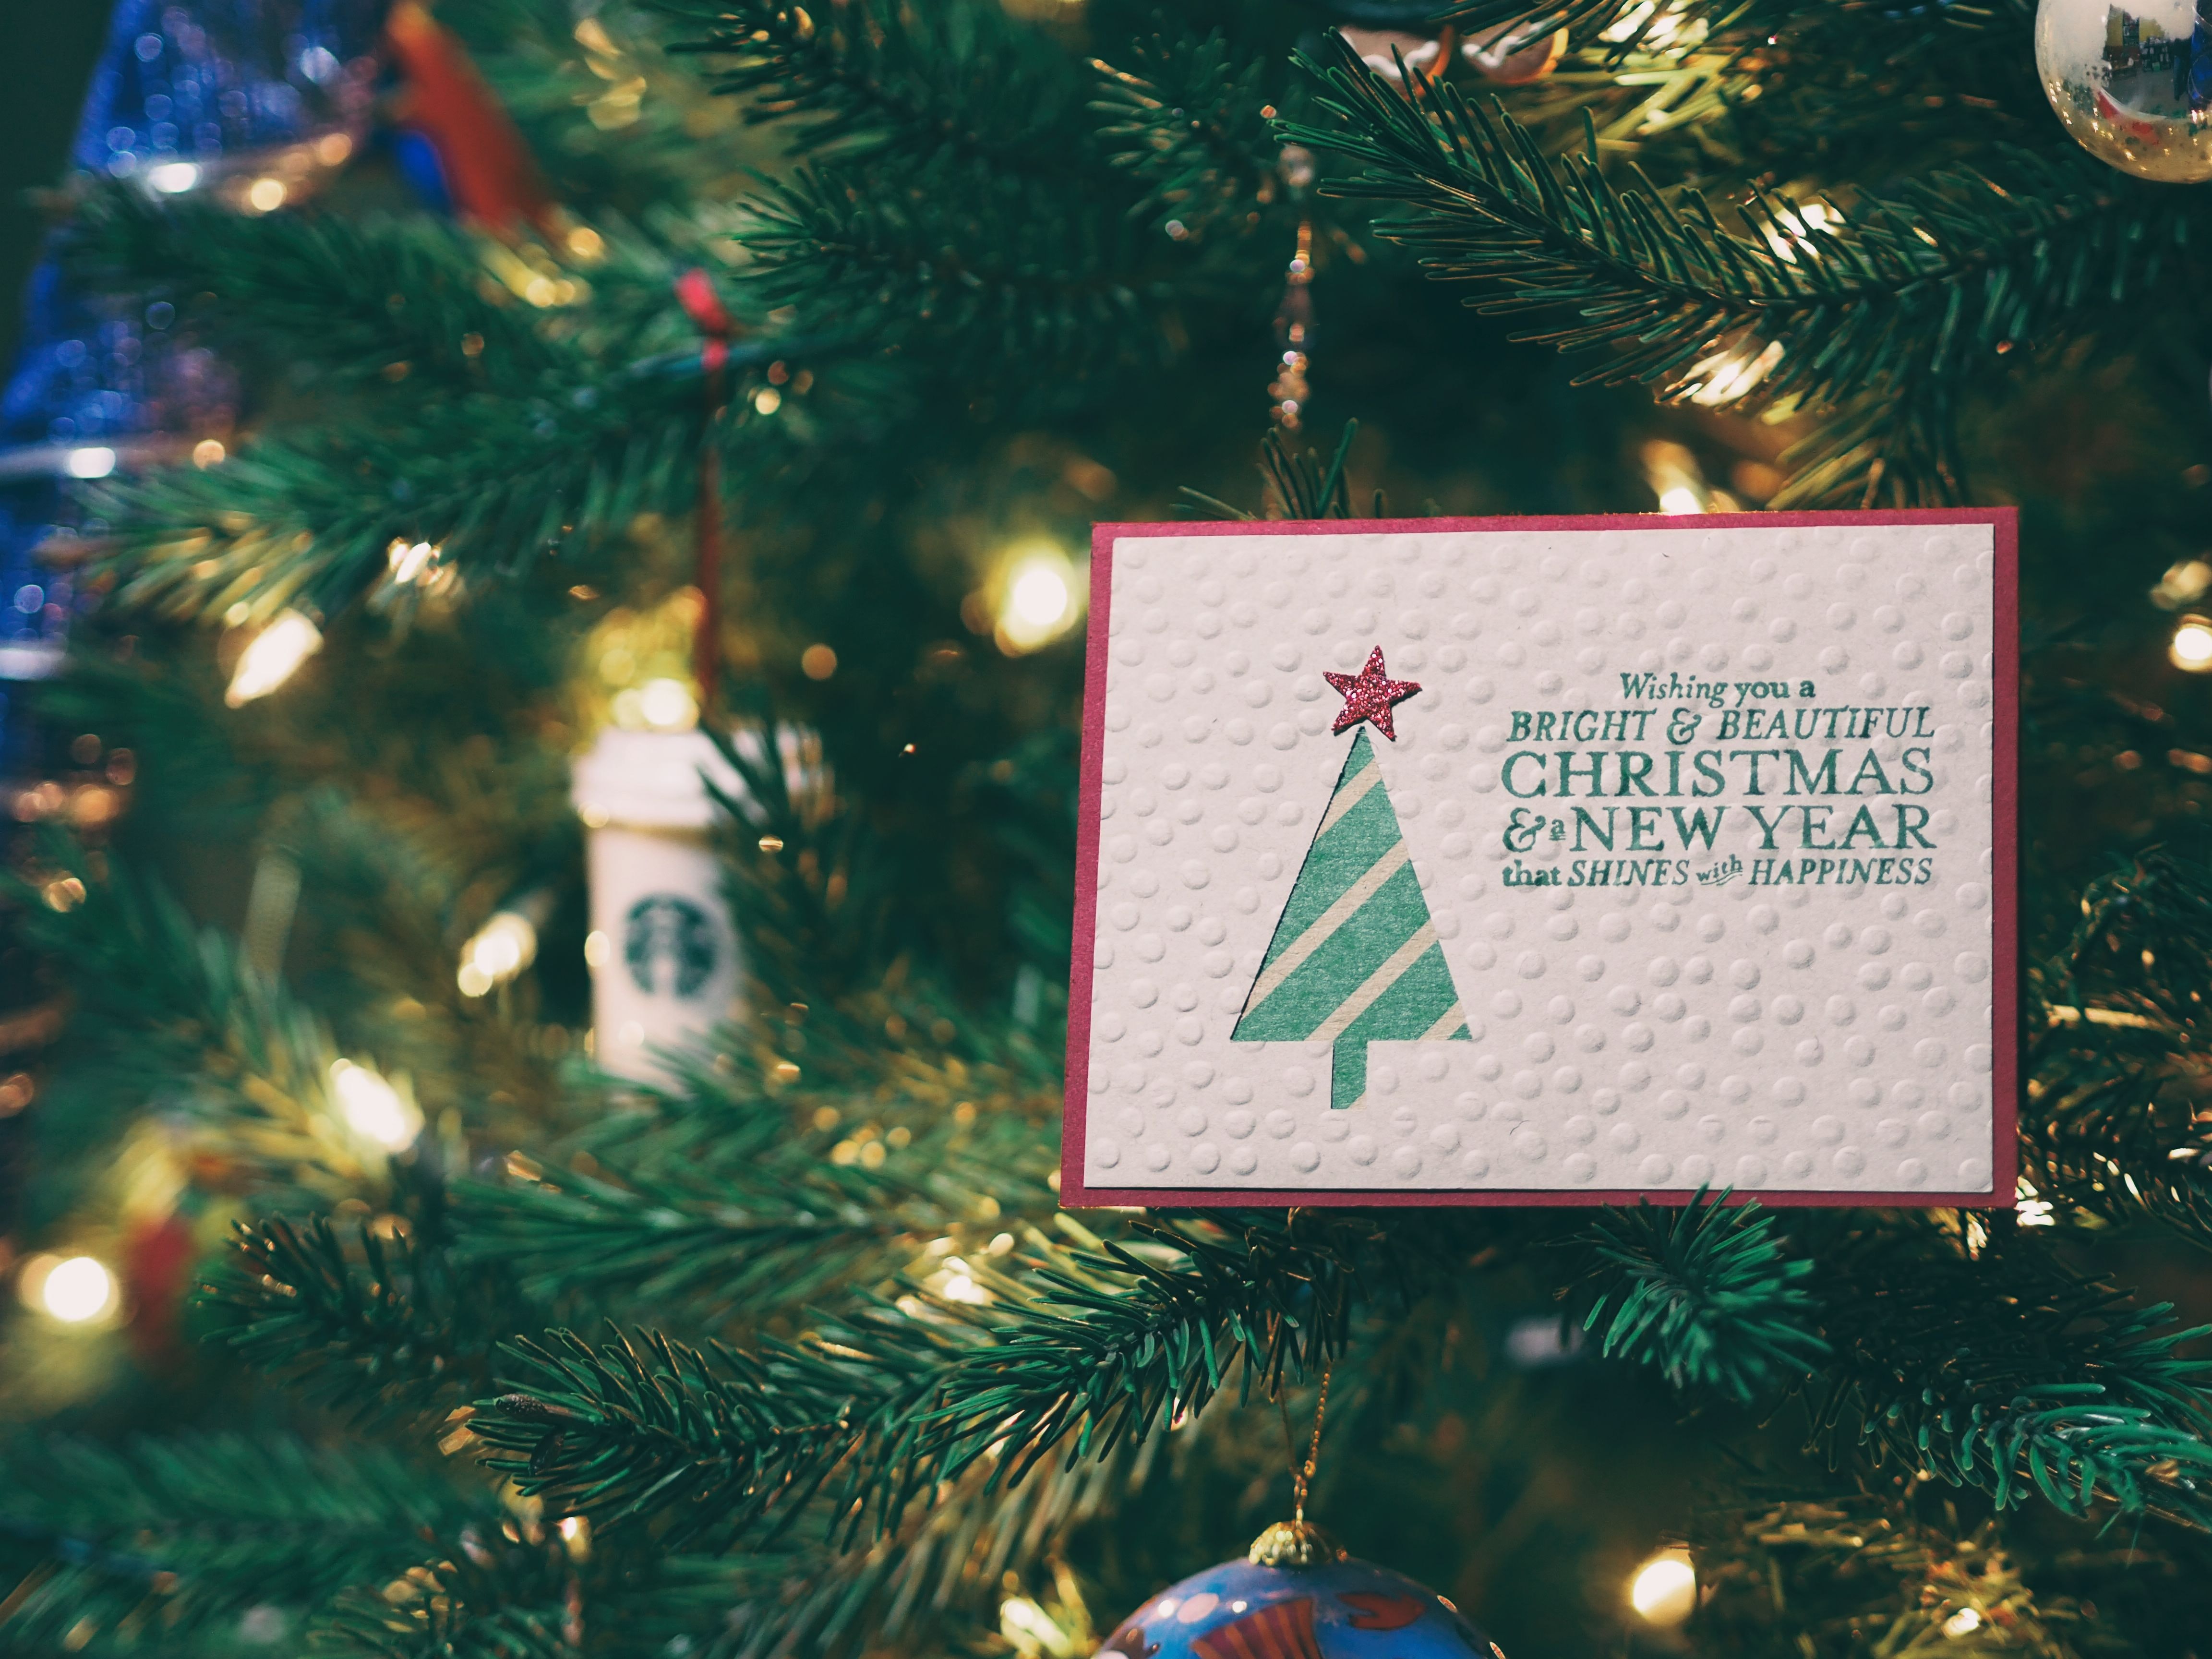 christmas card in tree by aaron burden on unsplash